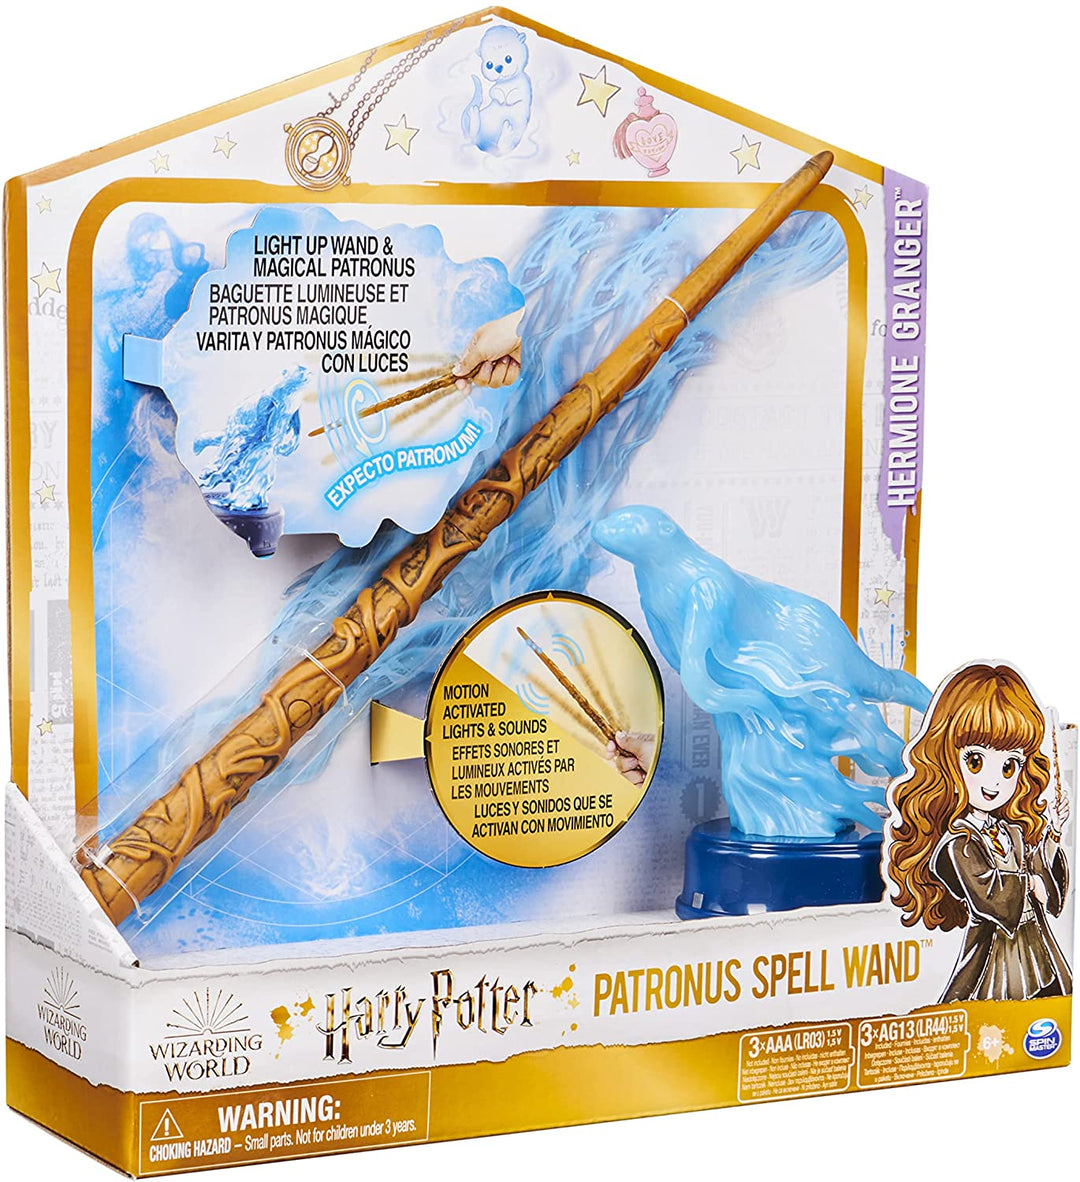 Wizarding World 6064361 PatronusSpellWandHermione Harry Potter, 33-cm Hermione G